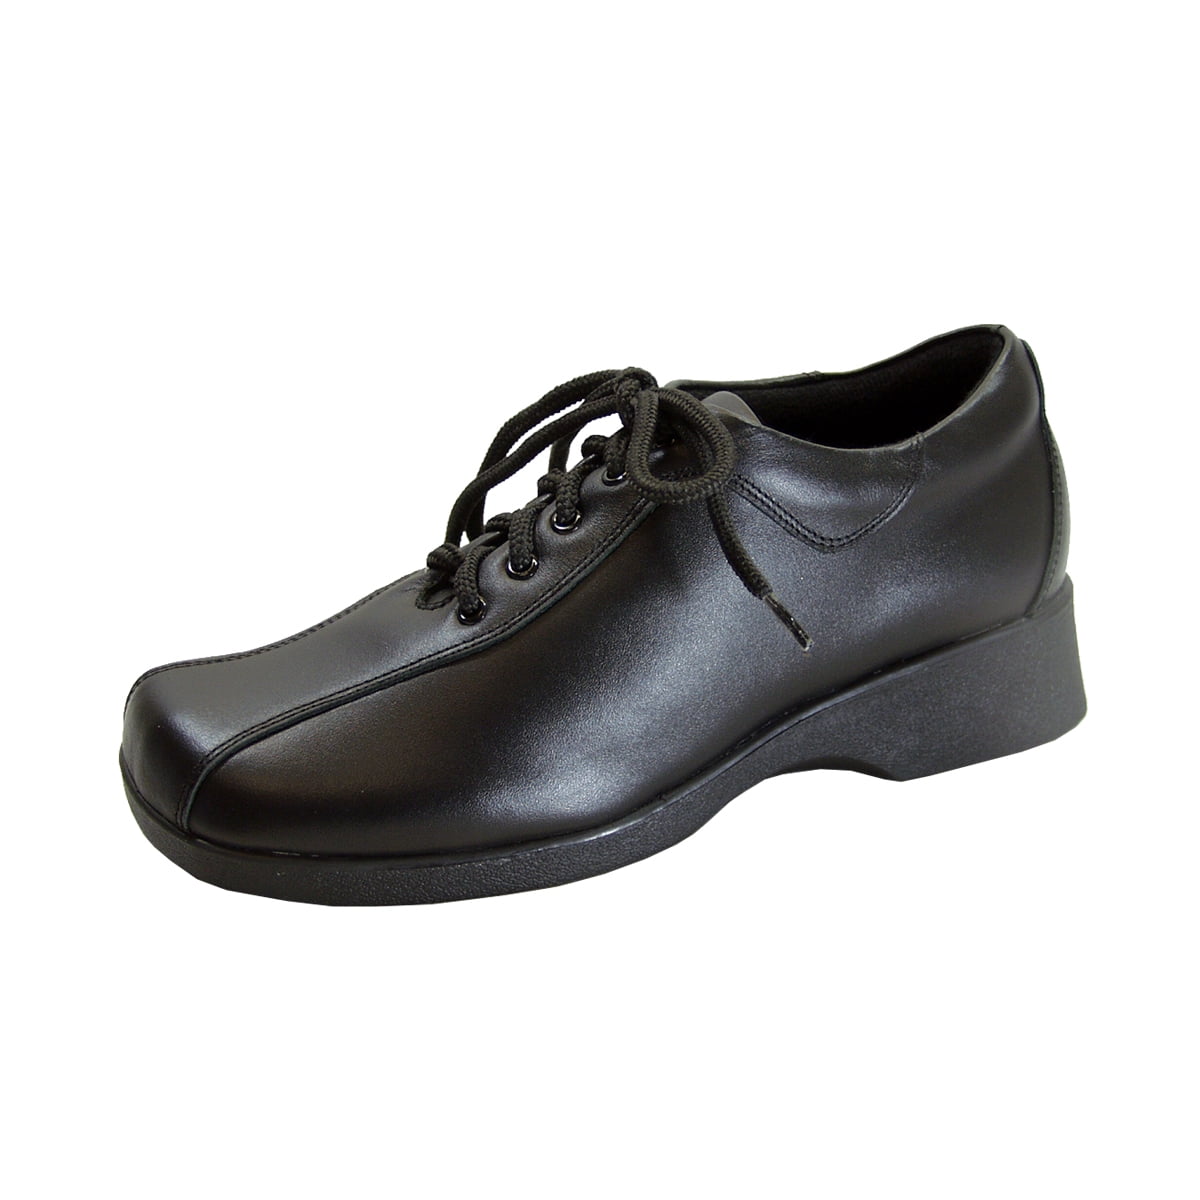 24 COMFORT Caprice Wide Width Leather Lace-Up Shoes BLACK 8 - Walmart.com